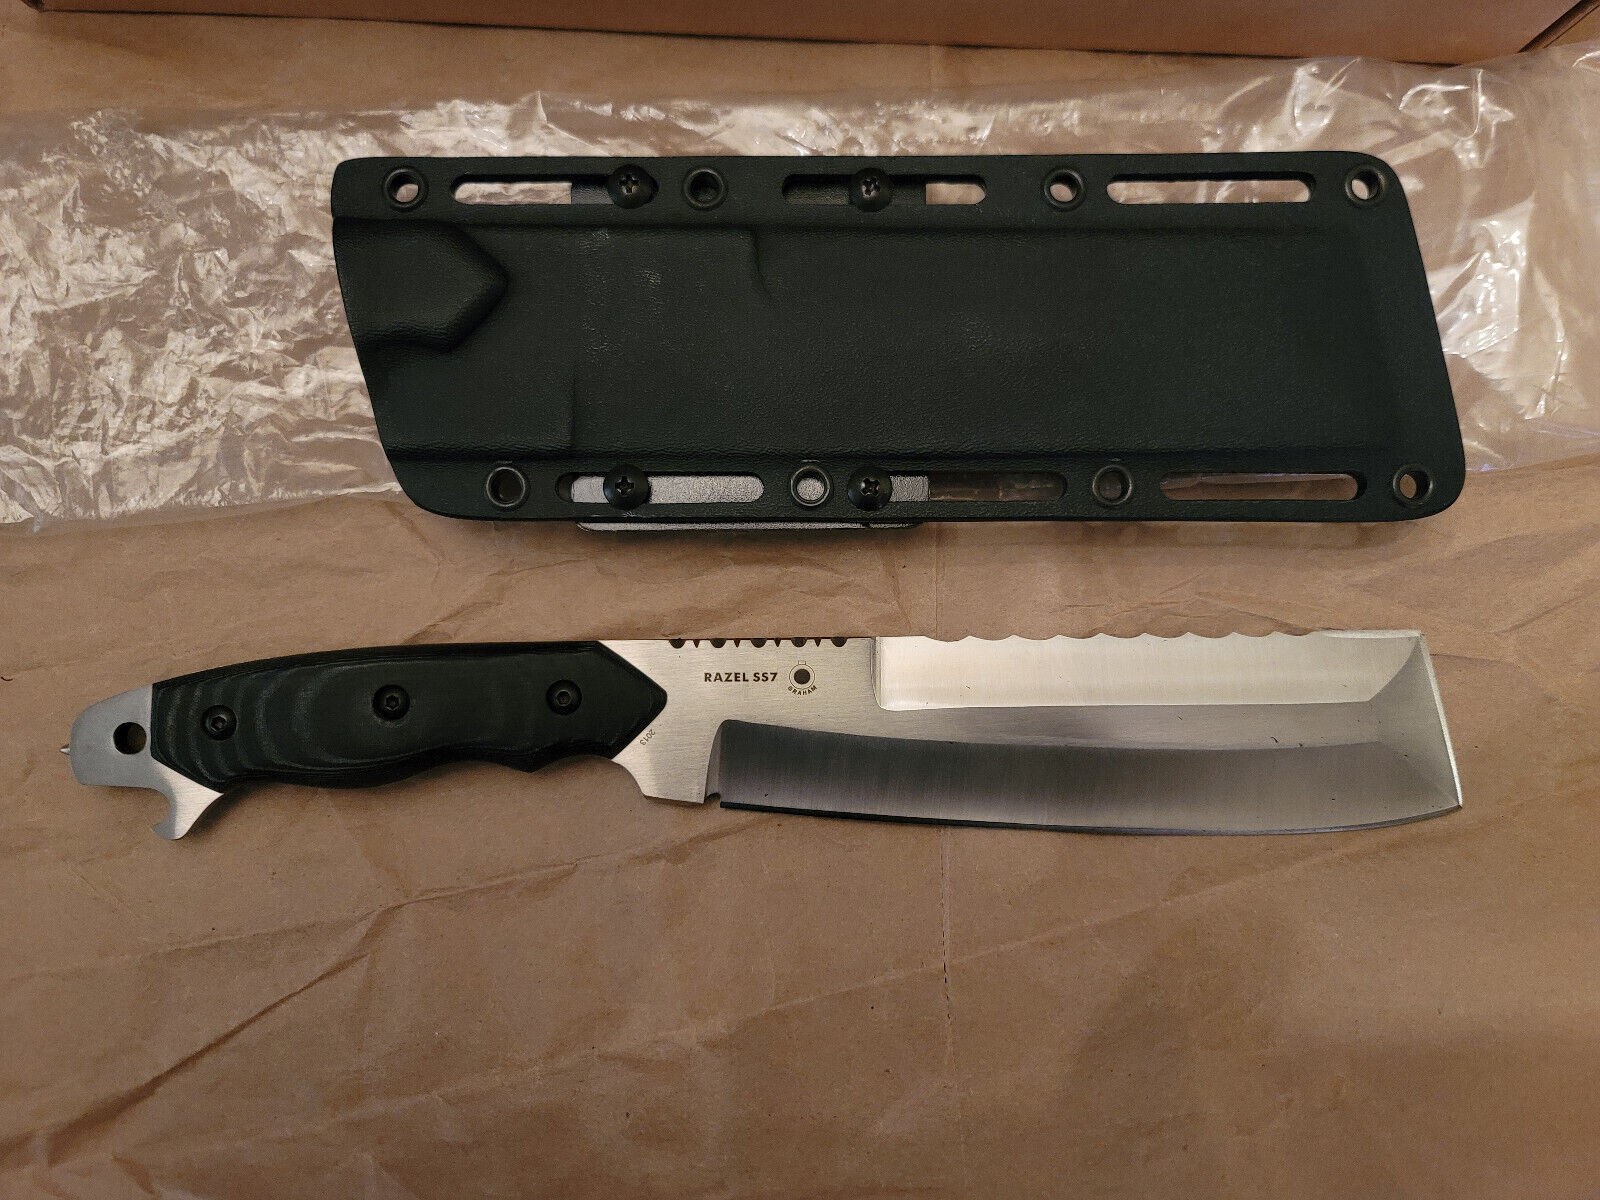 JOHN GRAHAM RAZEL SS7 2013 FULL TANG BLADE KNIFE WITH SHEATH - NEW, OPEN BOX